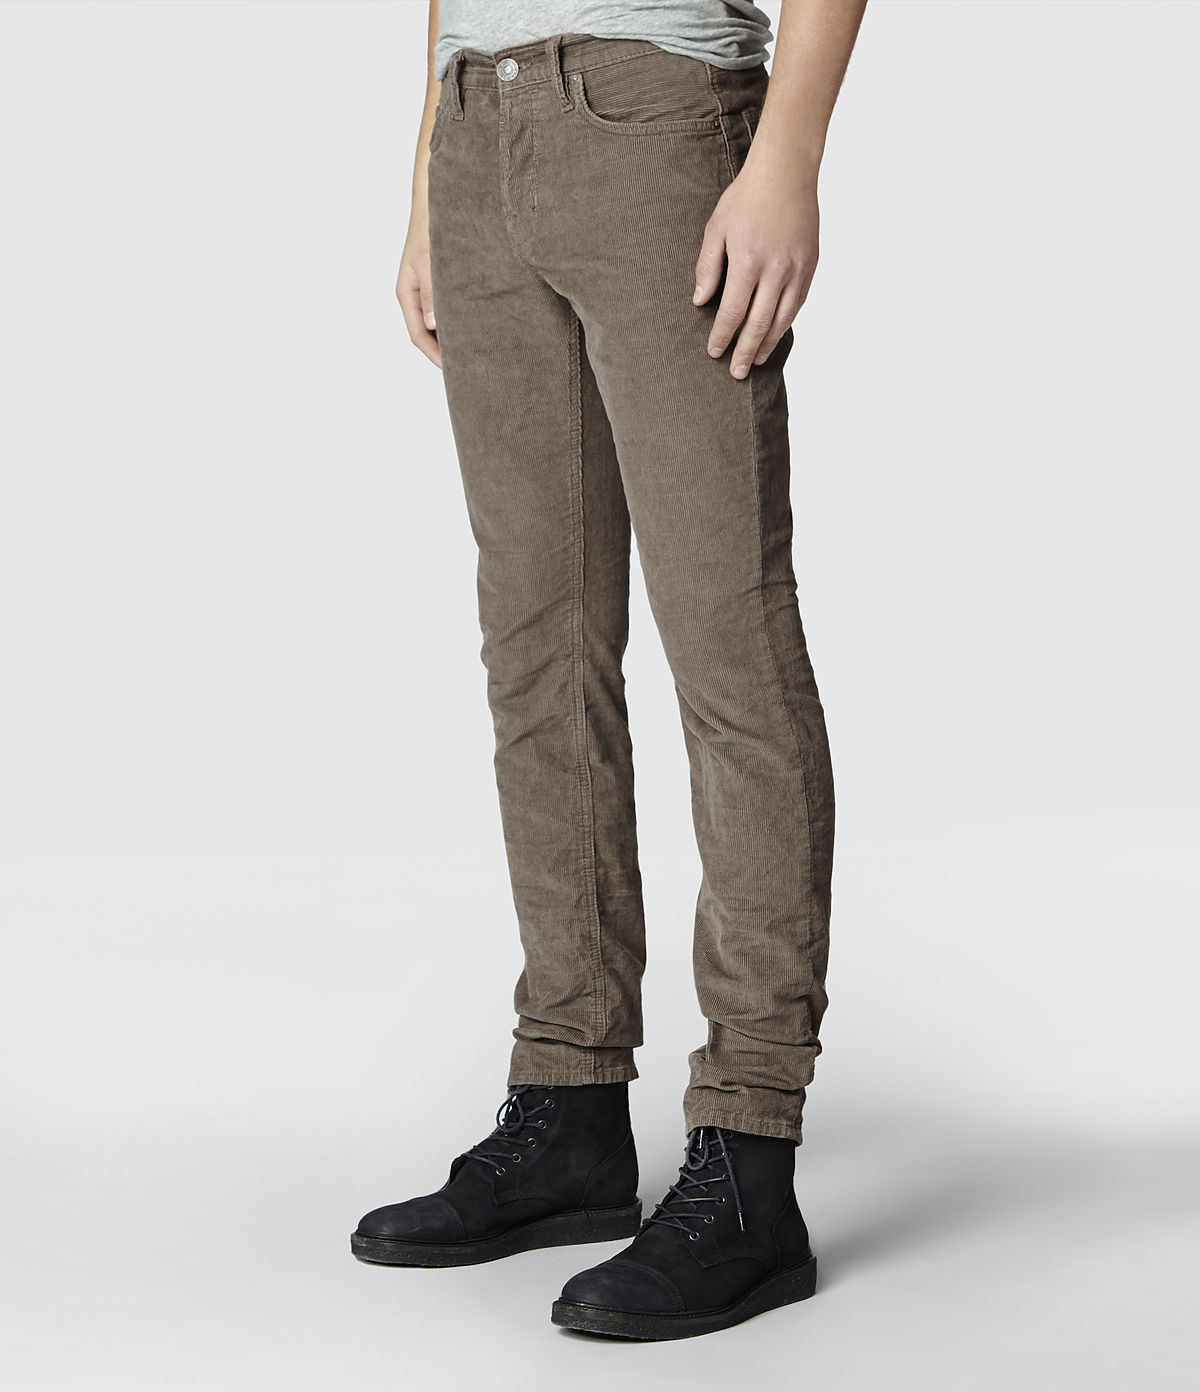 AllSaints Corduroy Iggy Jeans in Khaki (Brown) for Men - Lyst